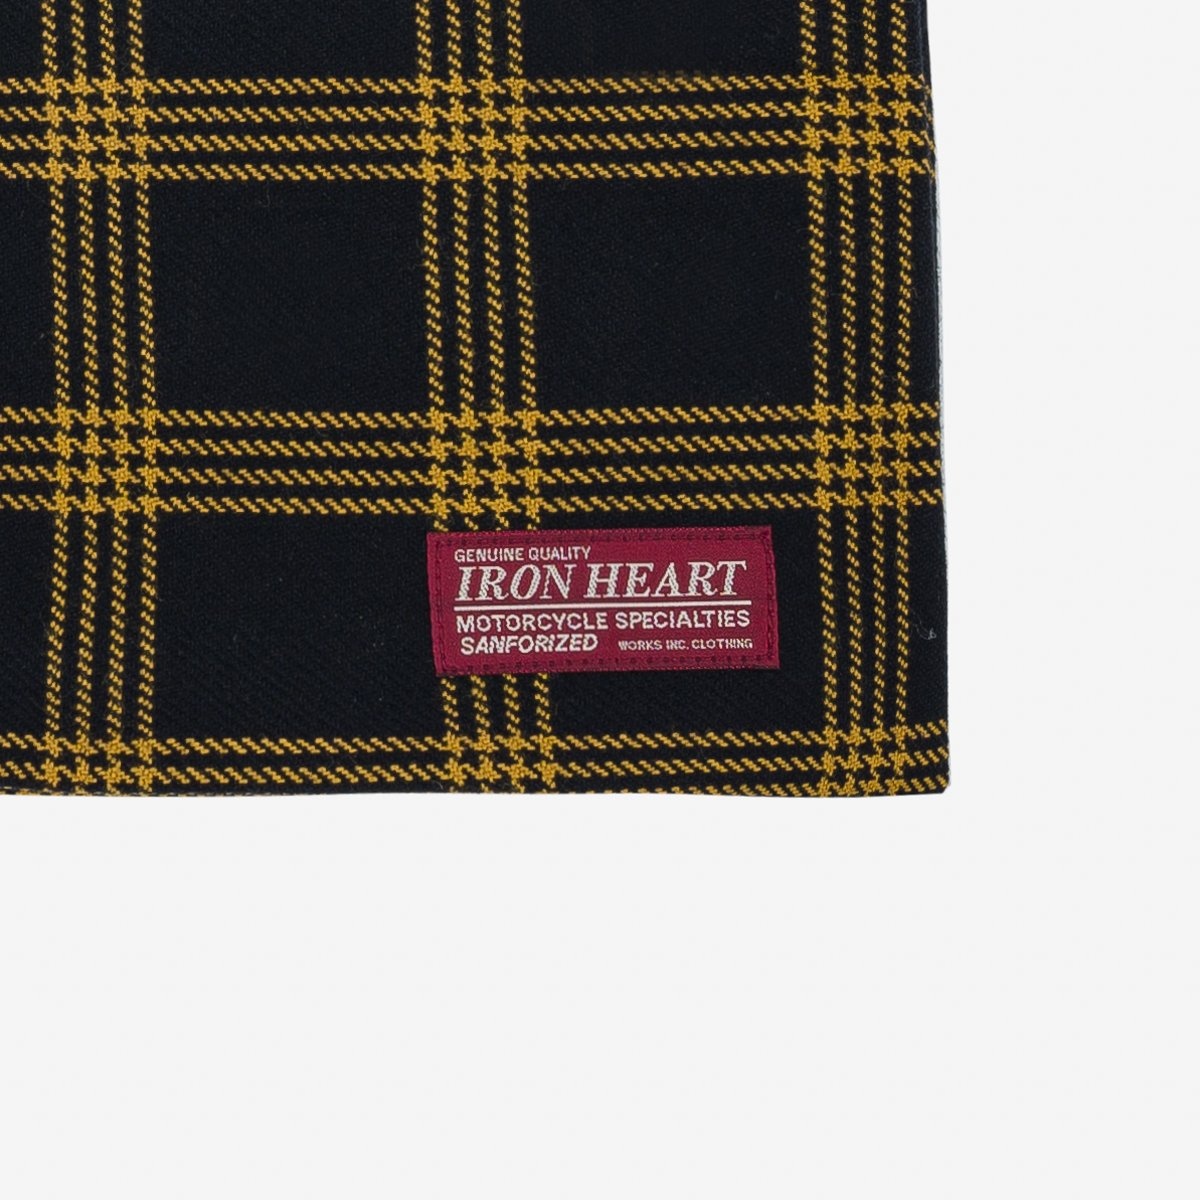 IHG-103-BLKWIN Ultra Heavy Flannel Windowpane Check Cushion Cover - Black/Yellow - 2